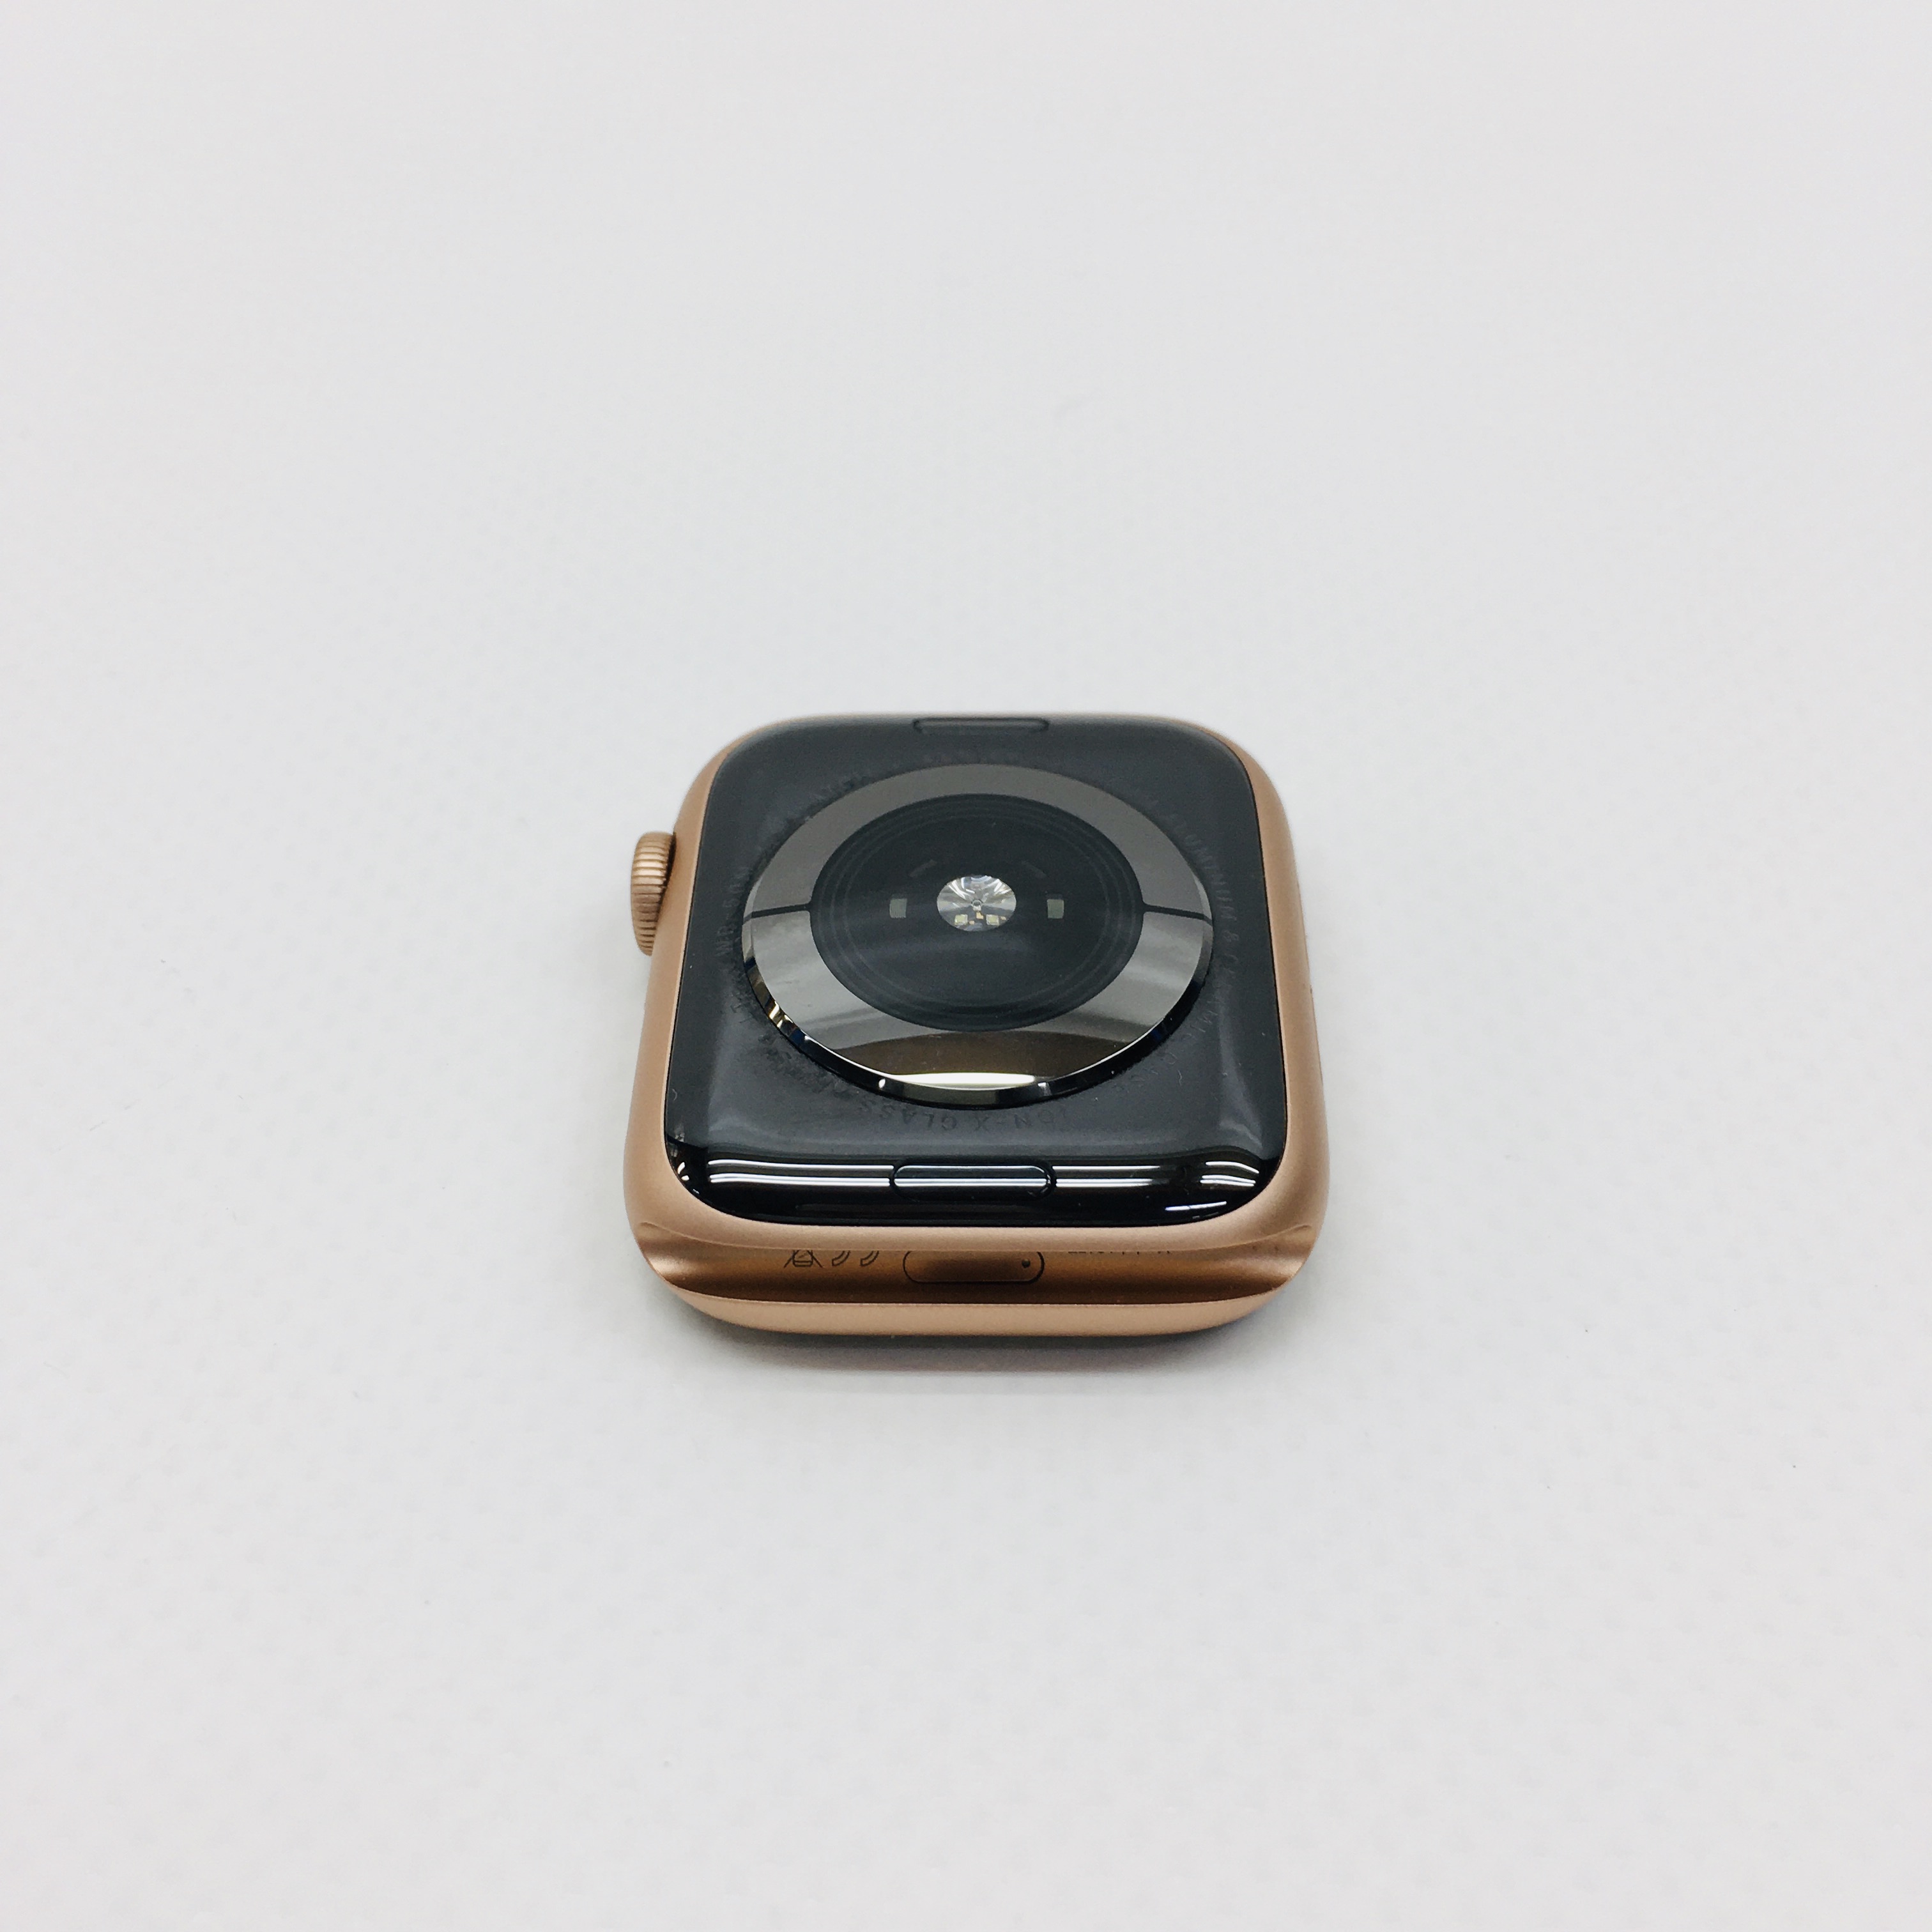 Watch Series 5 Aluminum Cellular (44mm), Gold, image 5